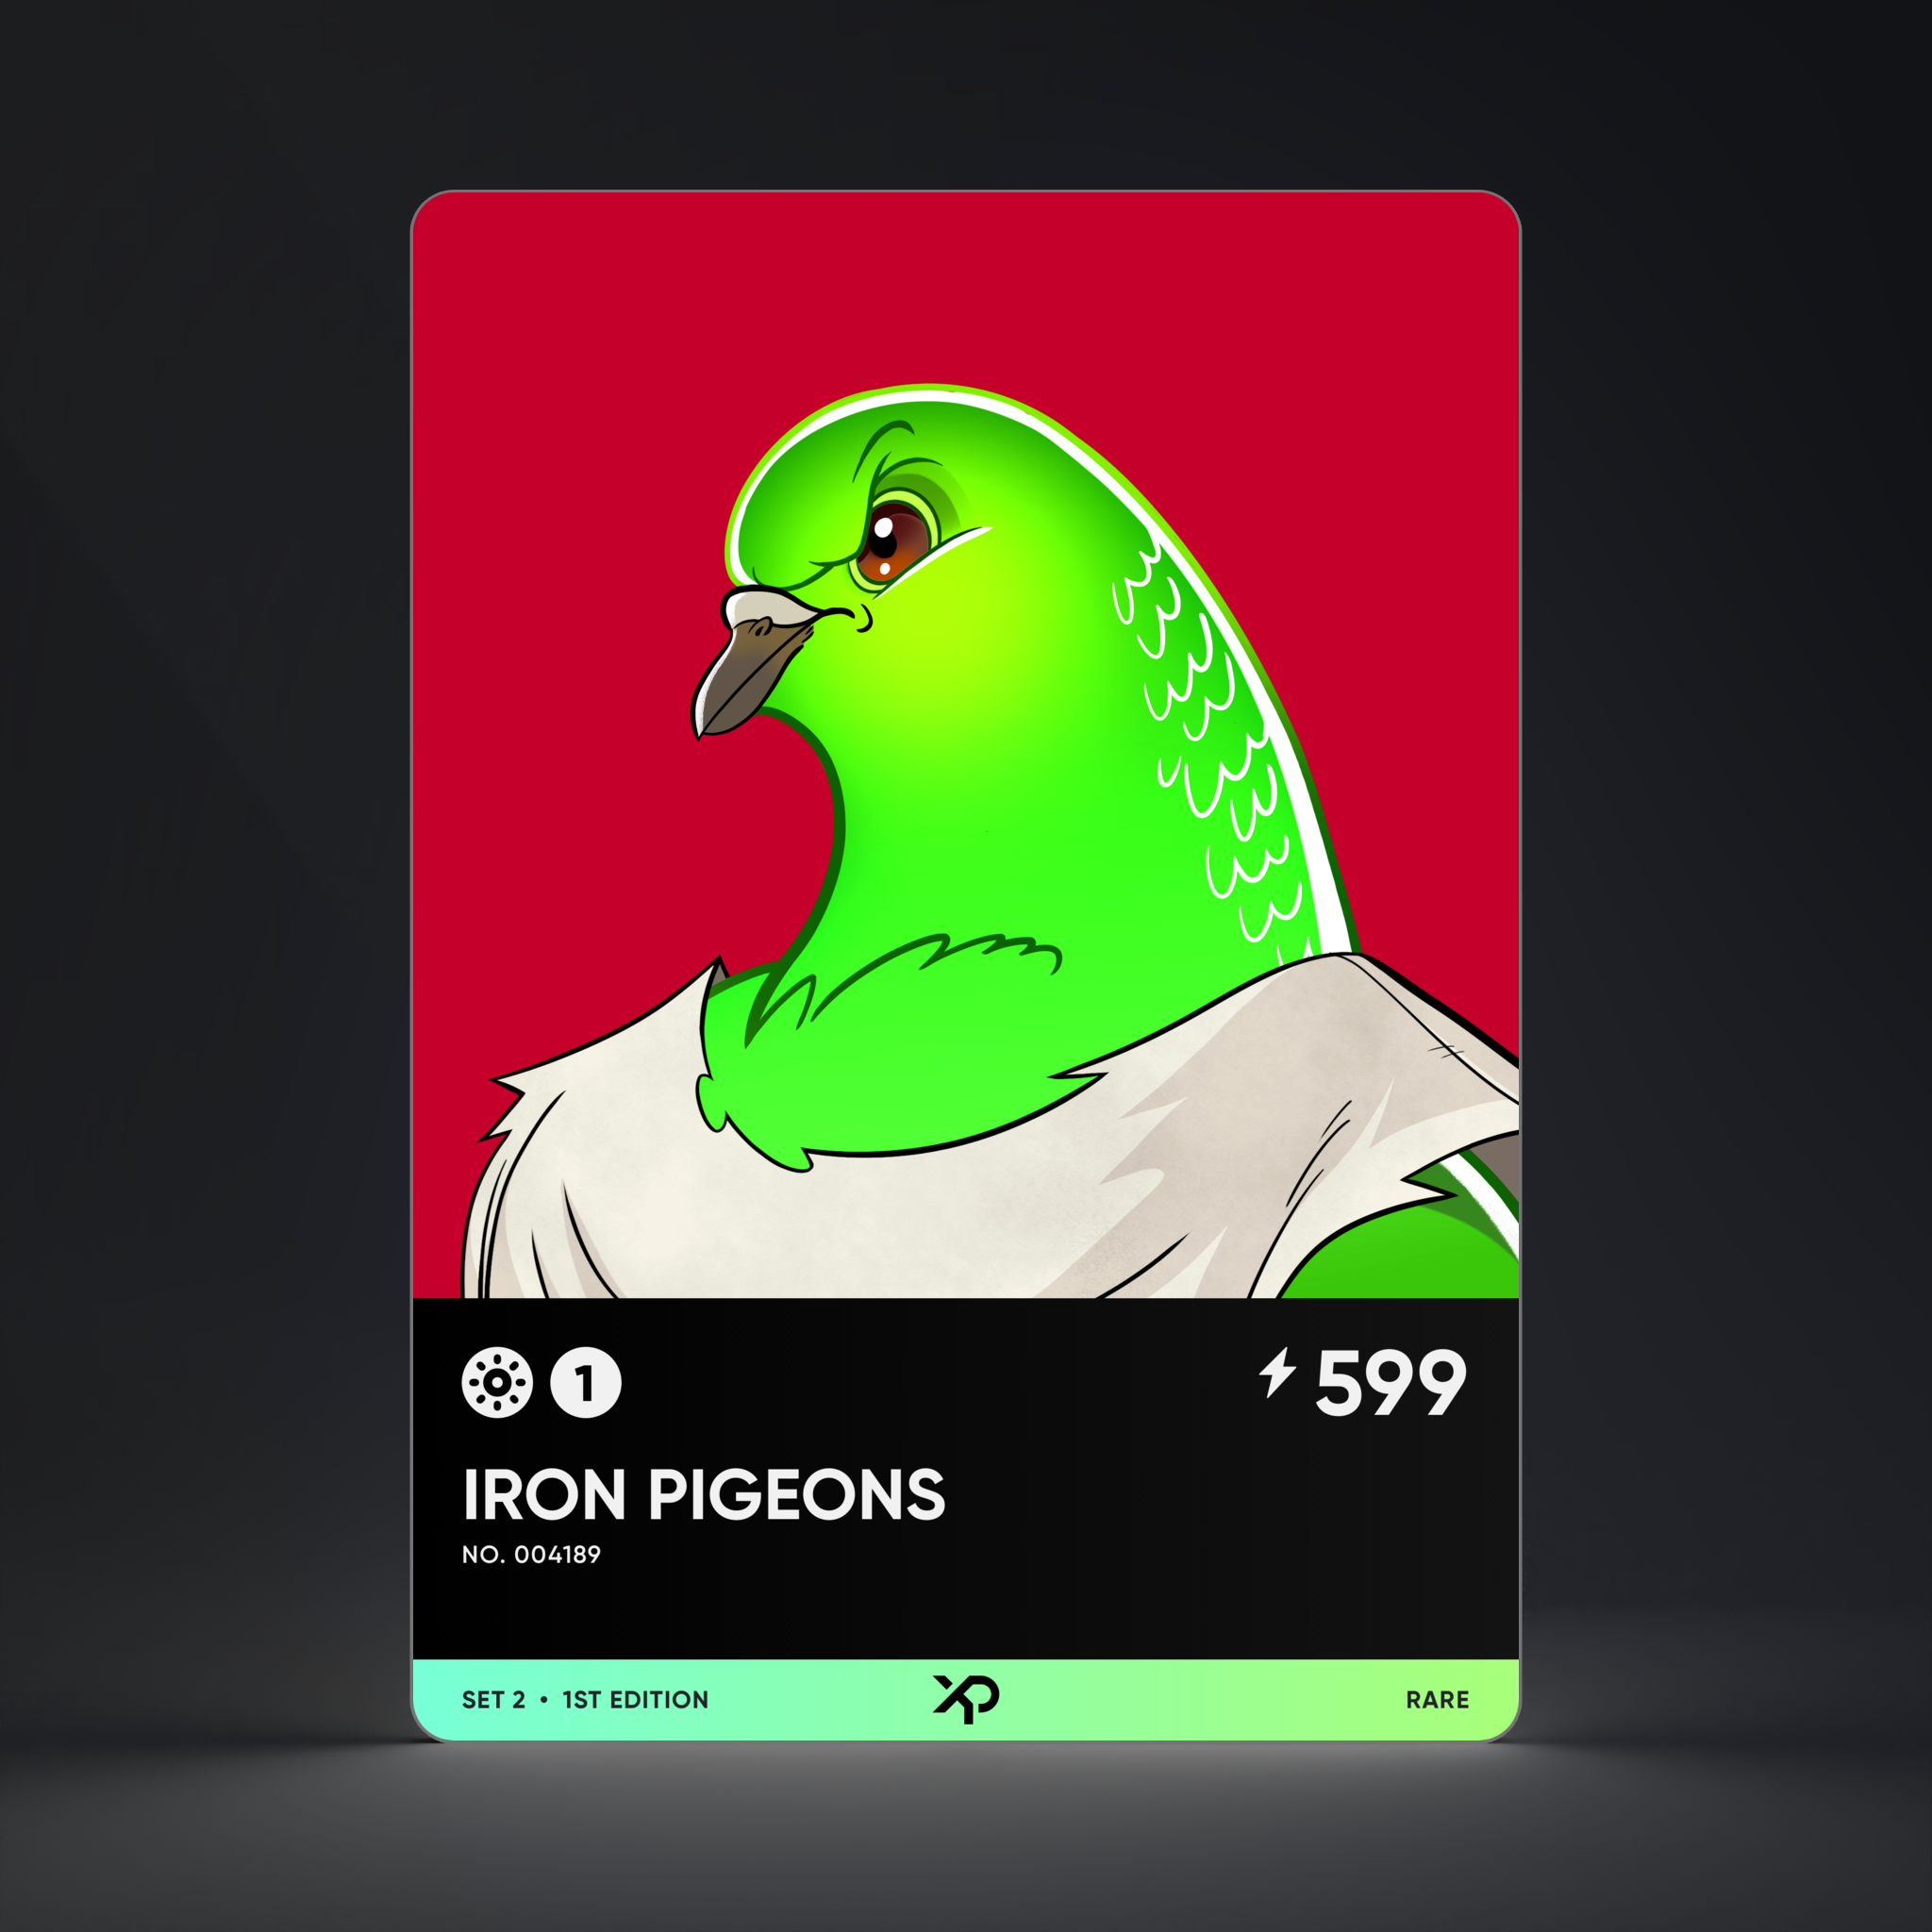 Iron Pigeon #4189 1st Edition